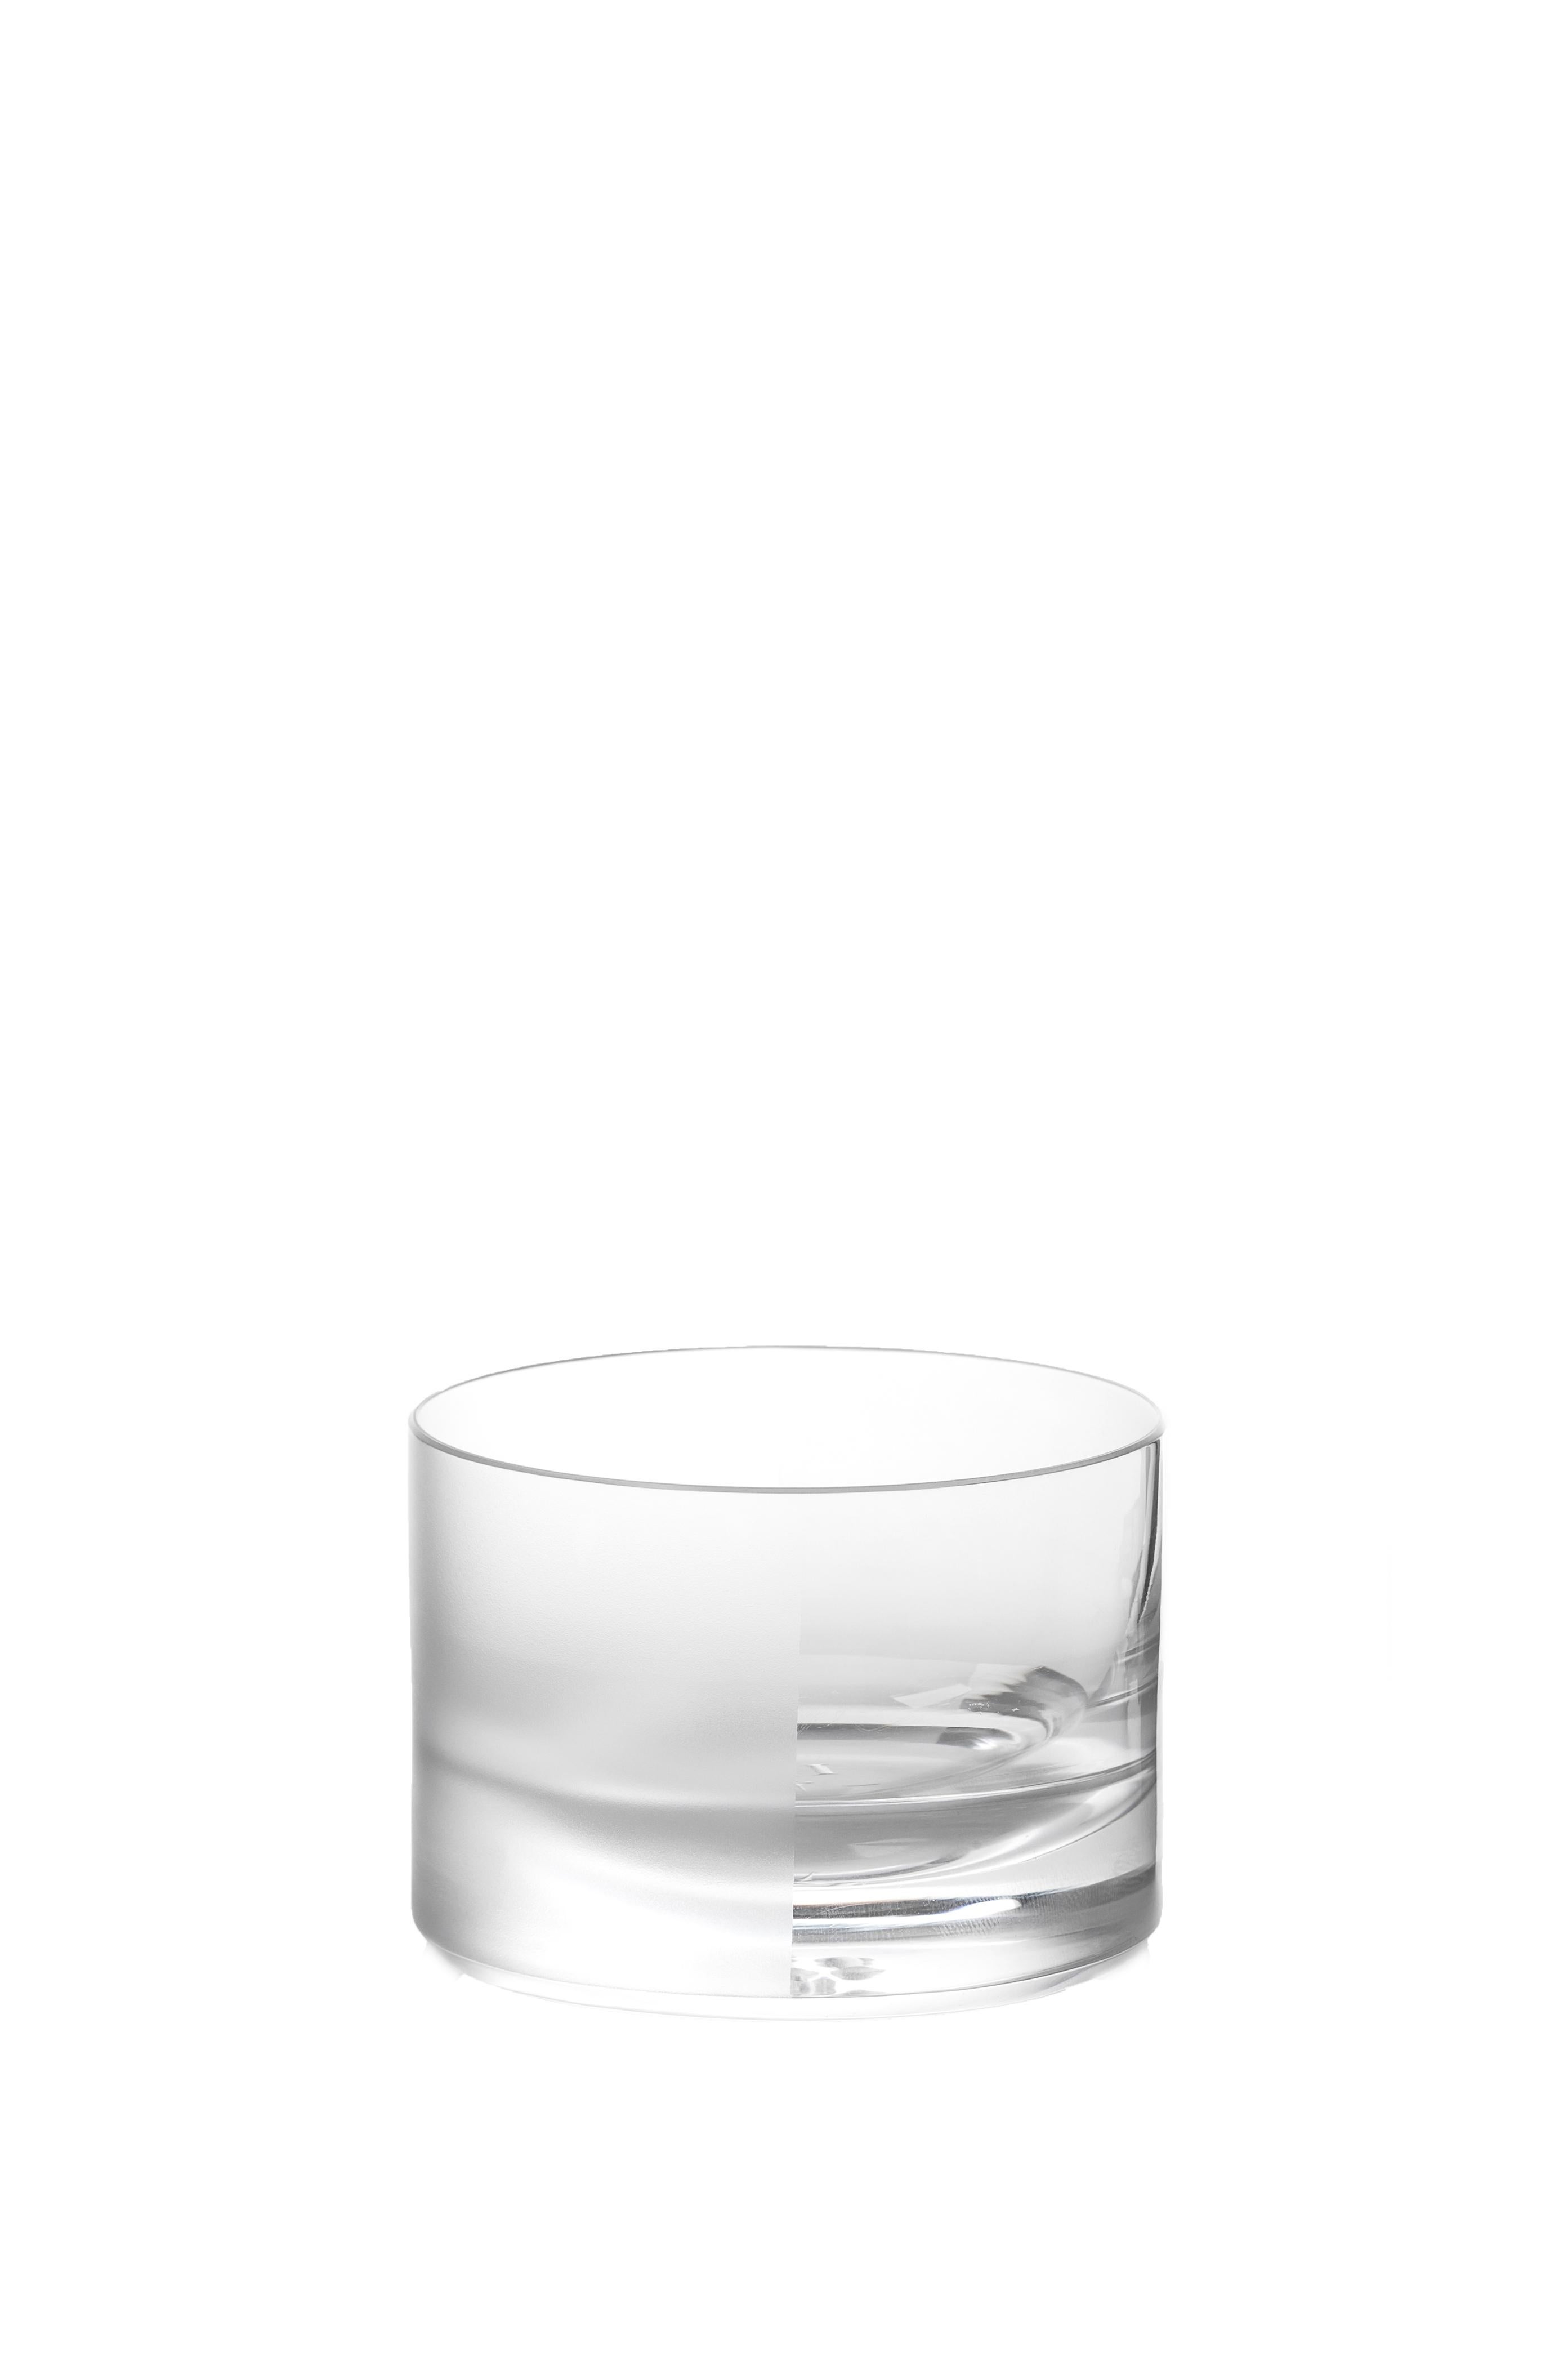 Scholten & Baijings Handmade Irish Crystal Low Glass 'Elements' Series Cut No II For Sale 1